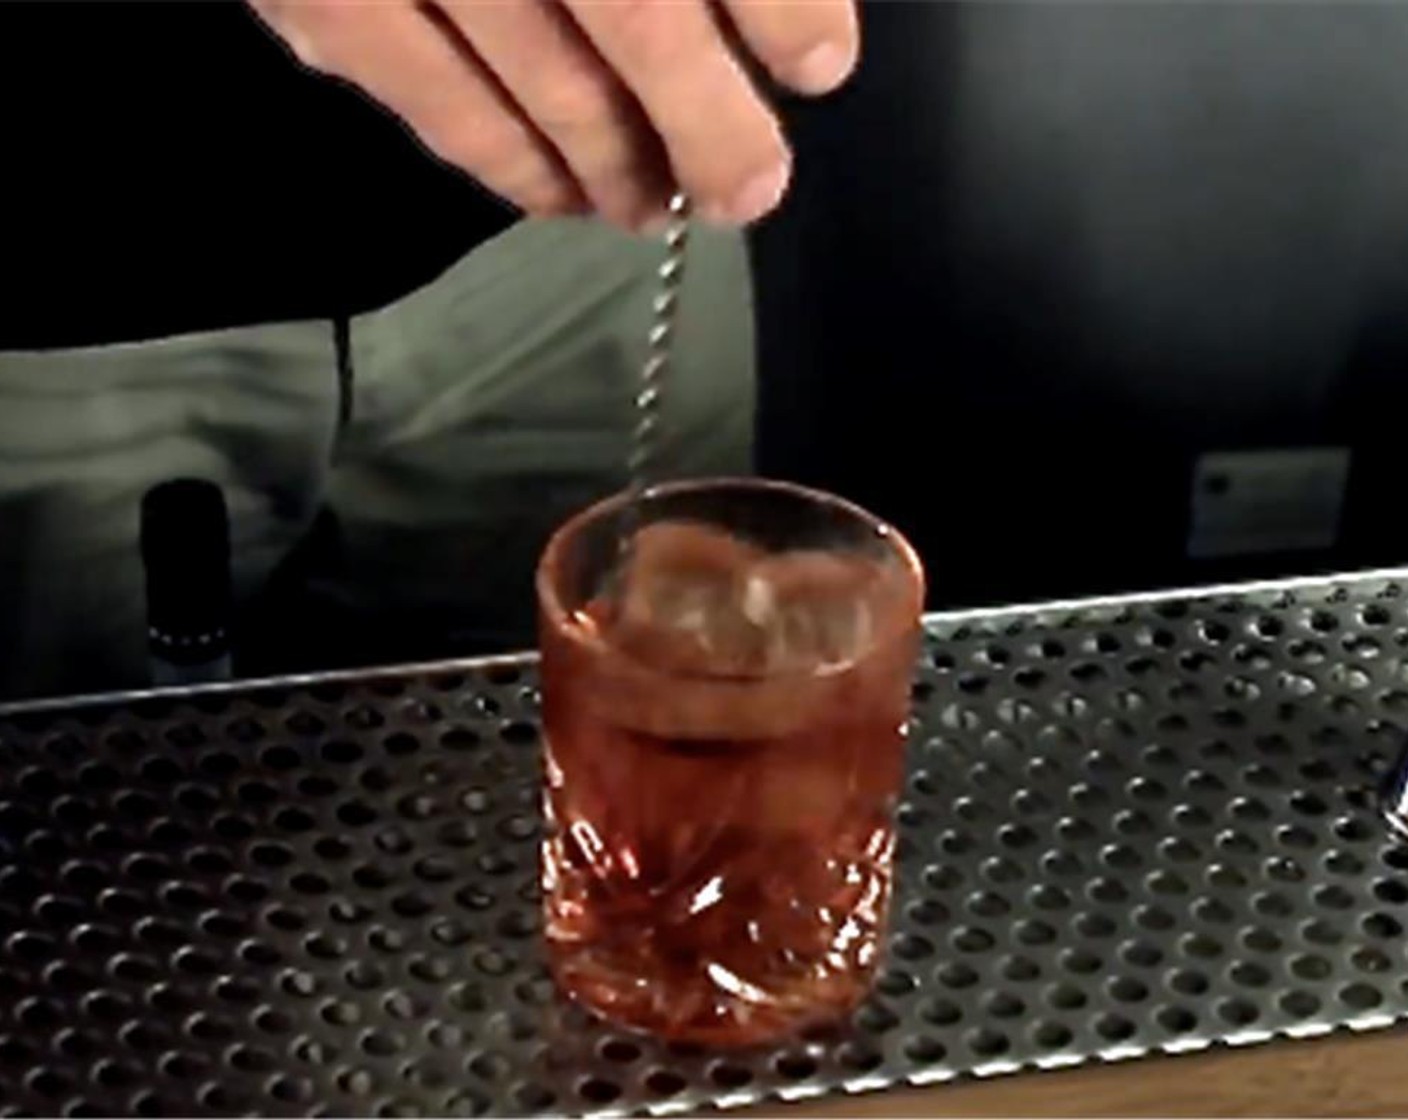 step 1 In a cocktail mixer or glass, stir VEEV® Spirit (1.5 fl oz), MARTINI Rosso (1 fl oz), and Aperol (1 fl oz) until very cold.